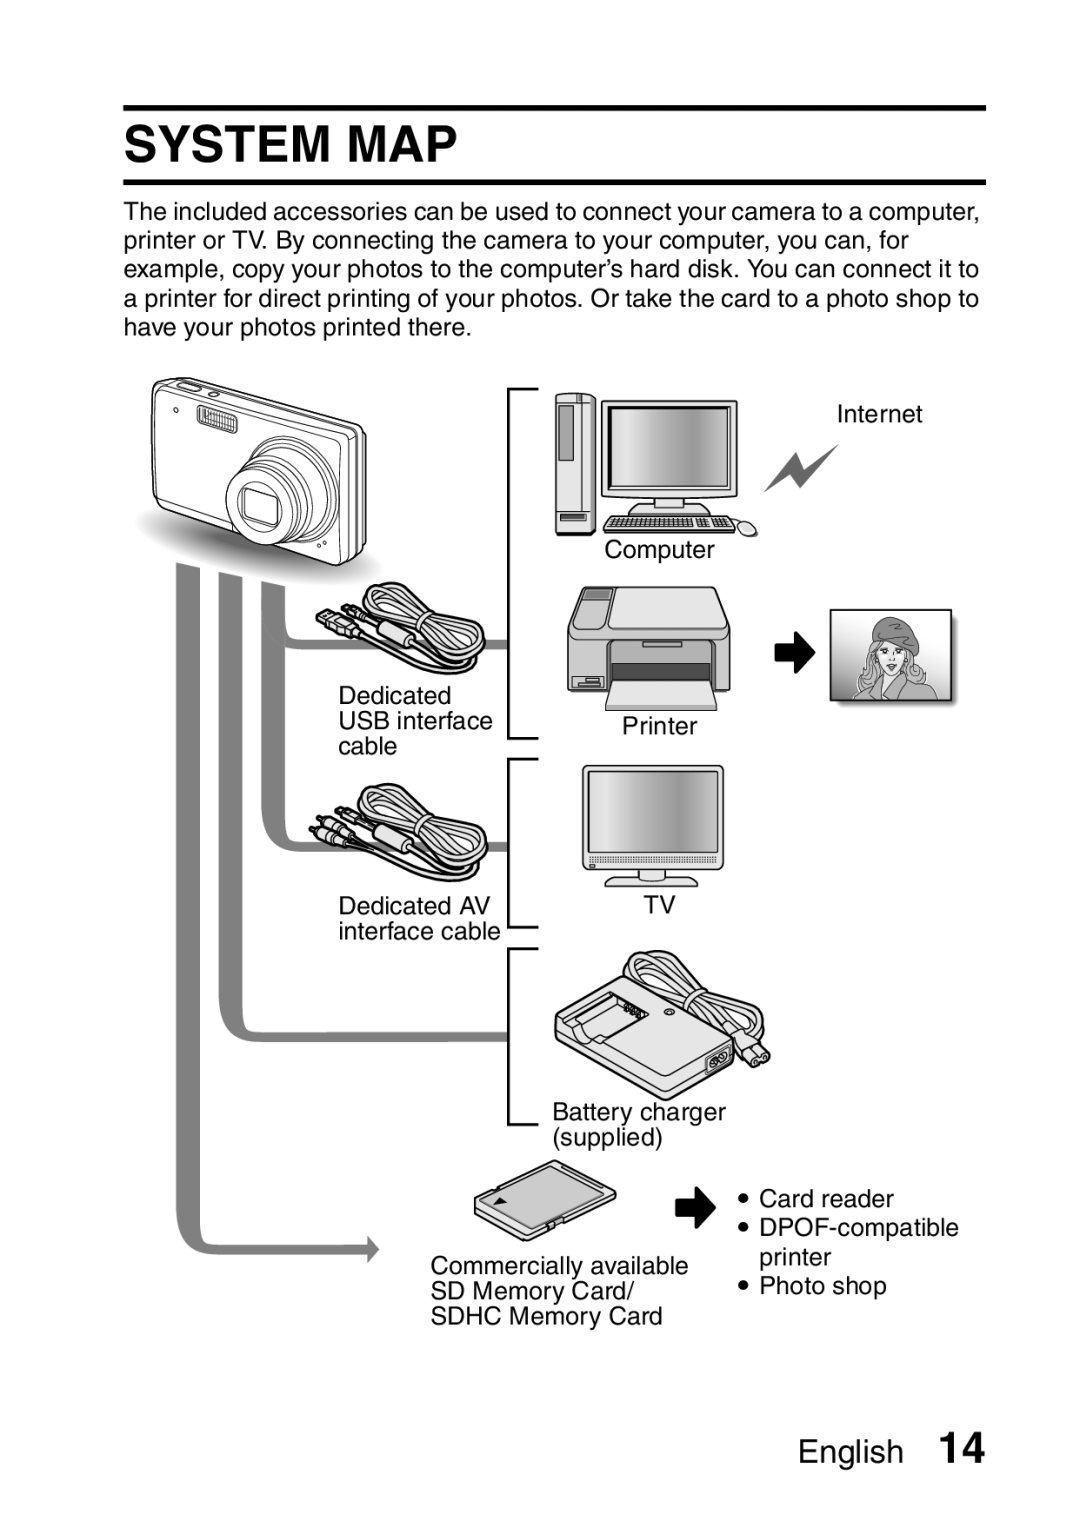 Samsung R50 instruction manual System Map, English 